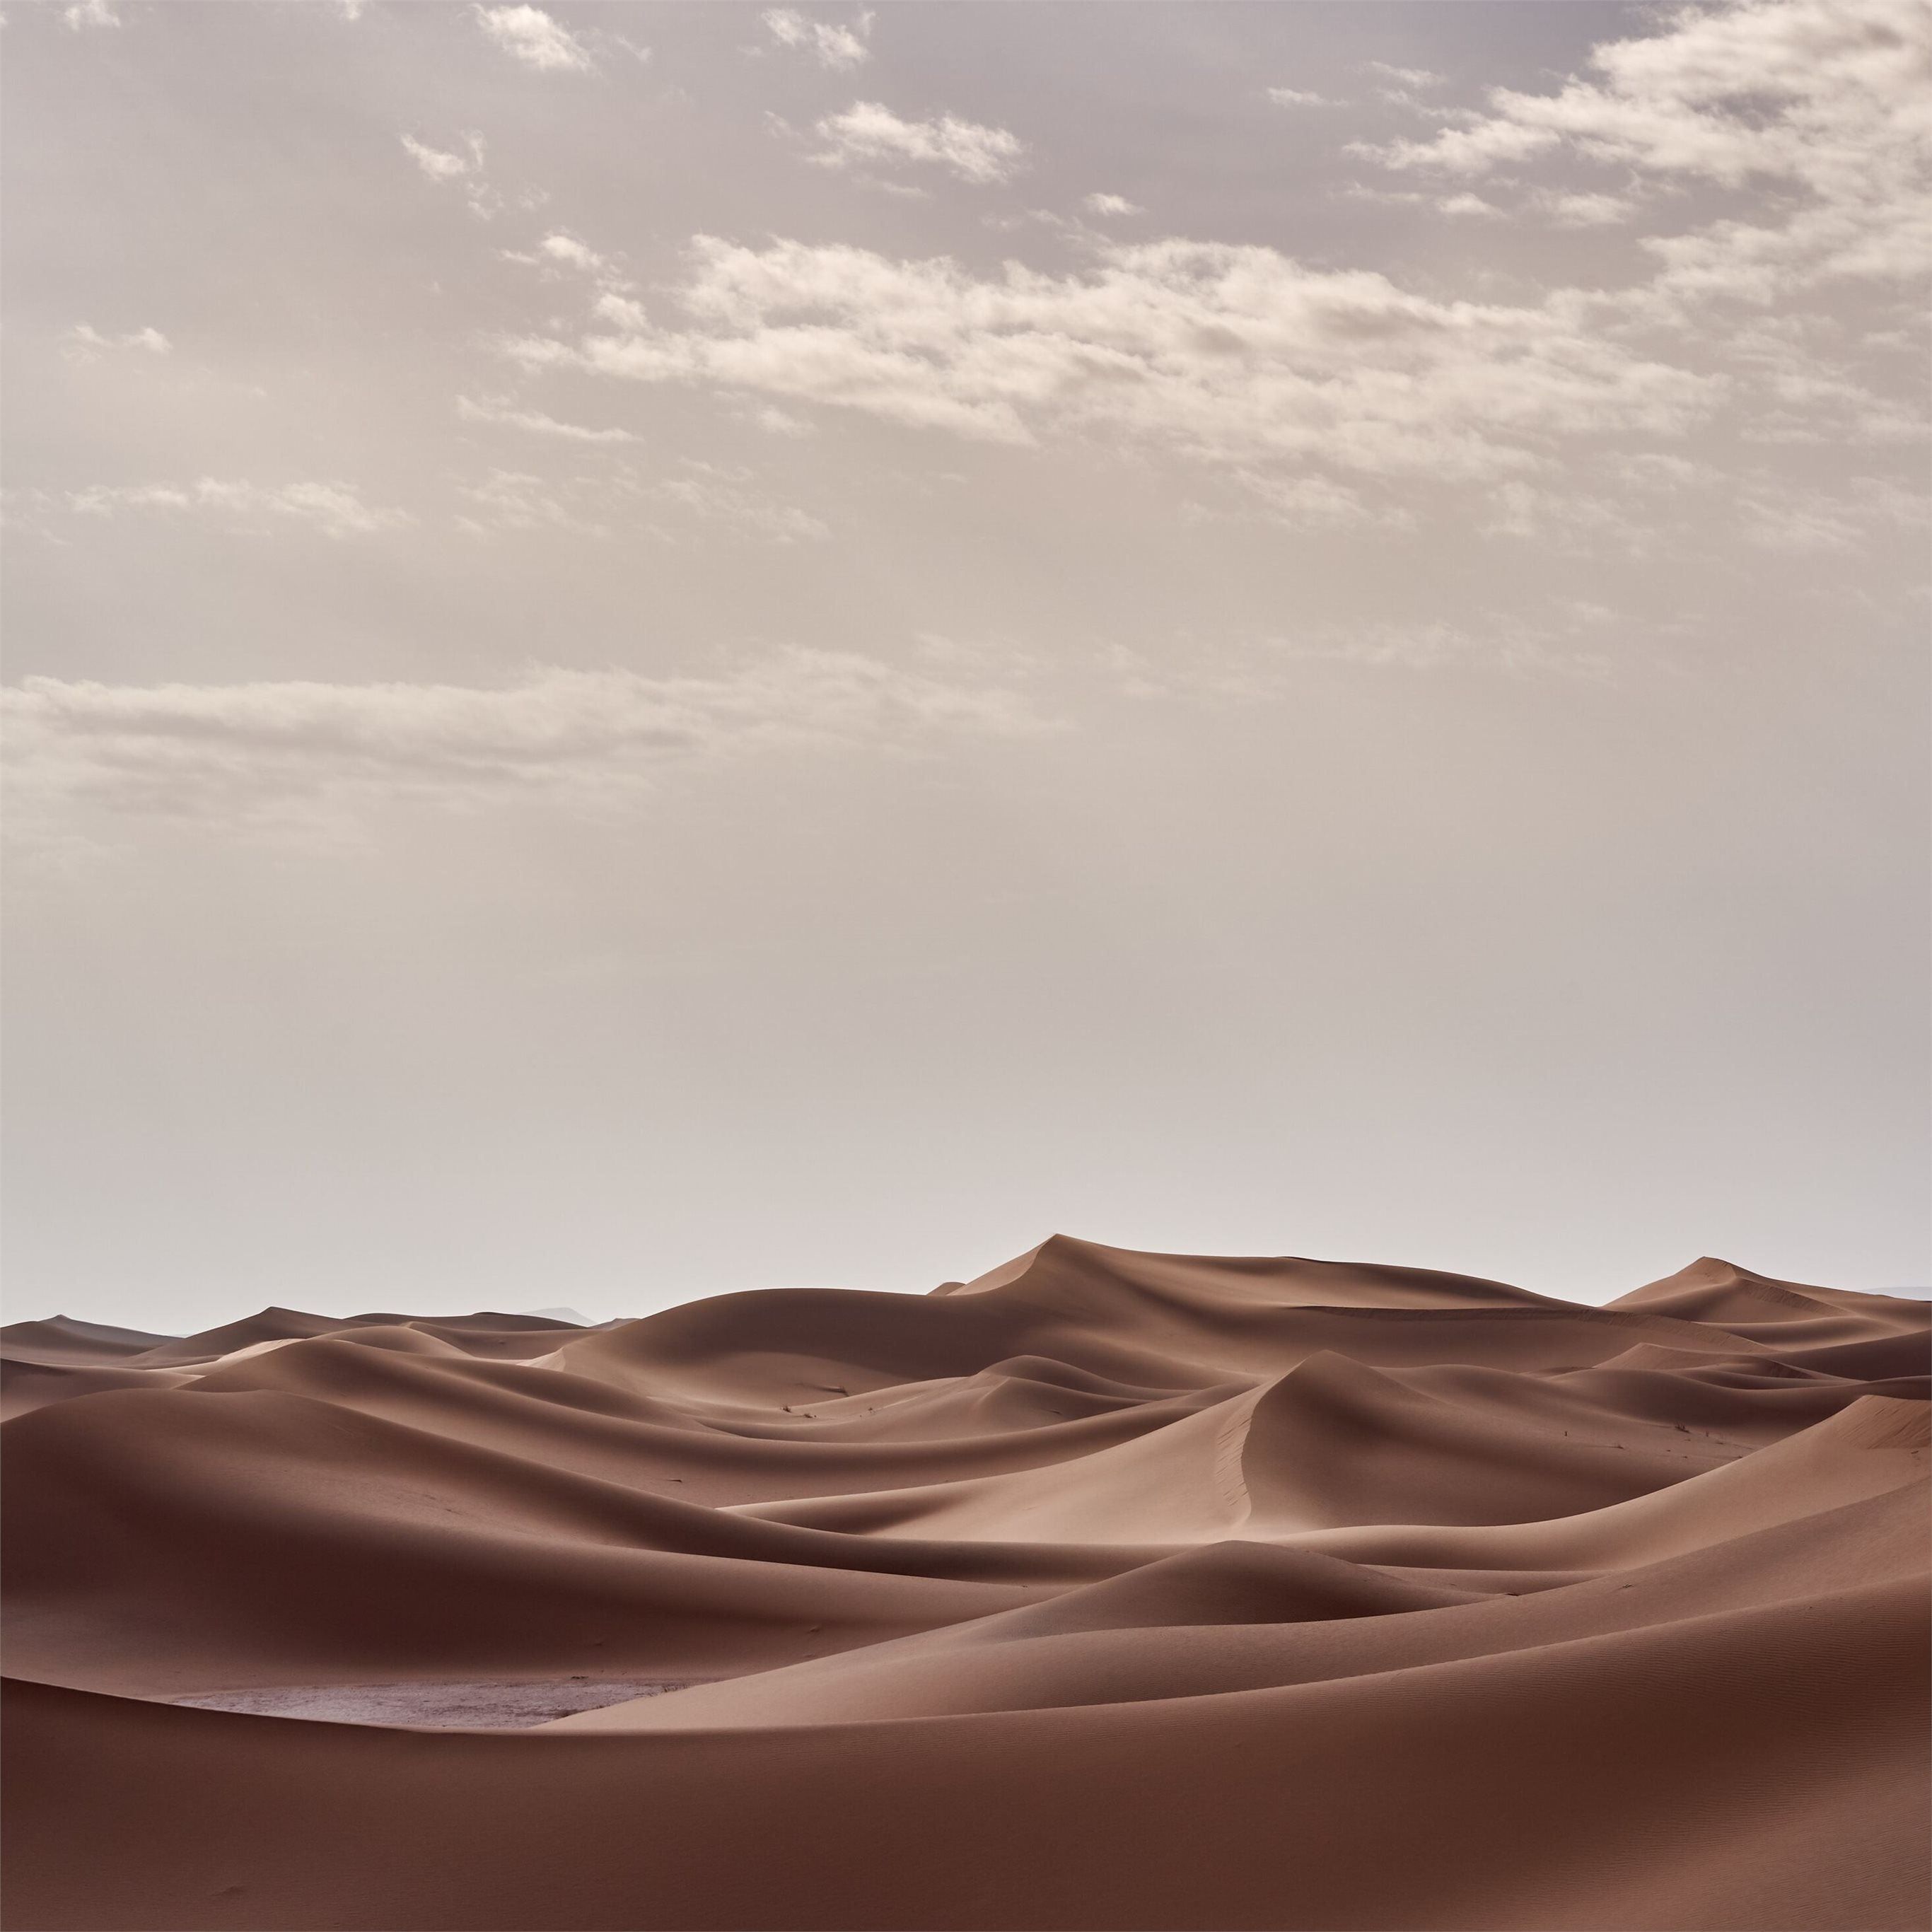 Best Desert iPad Pro Wallpaper HD [2020]